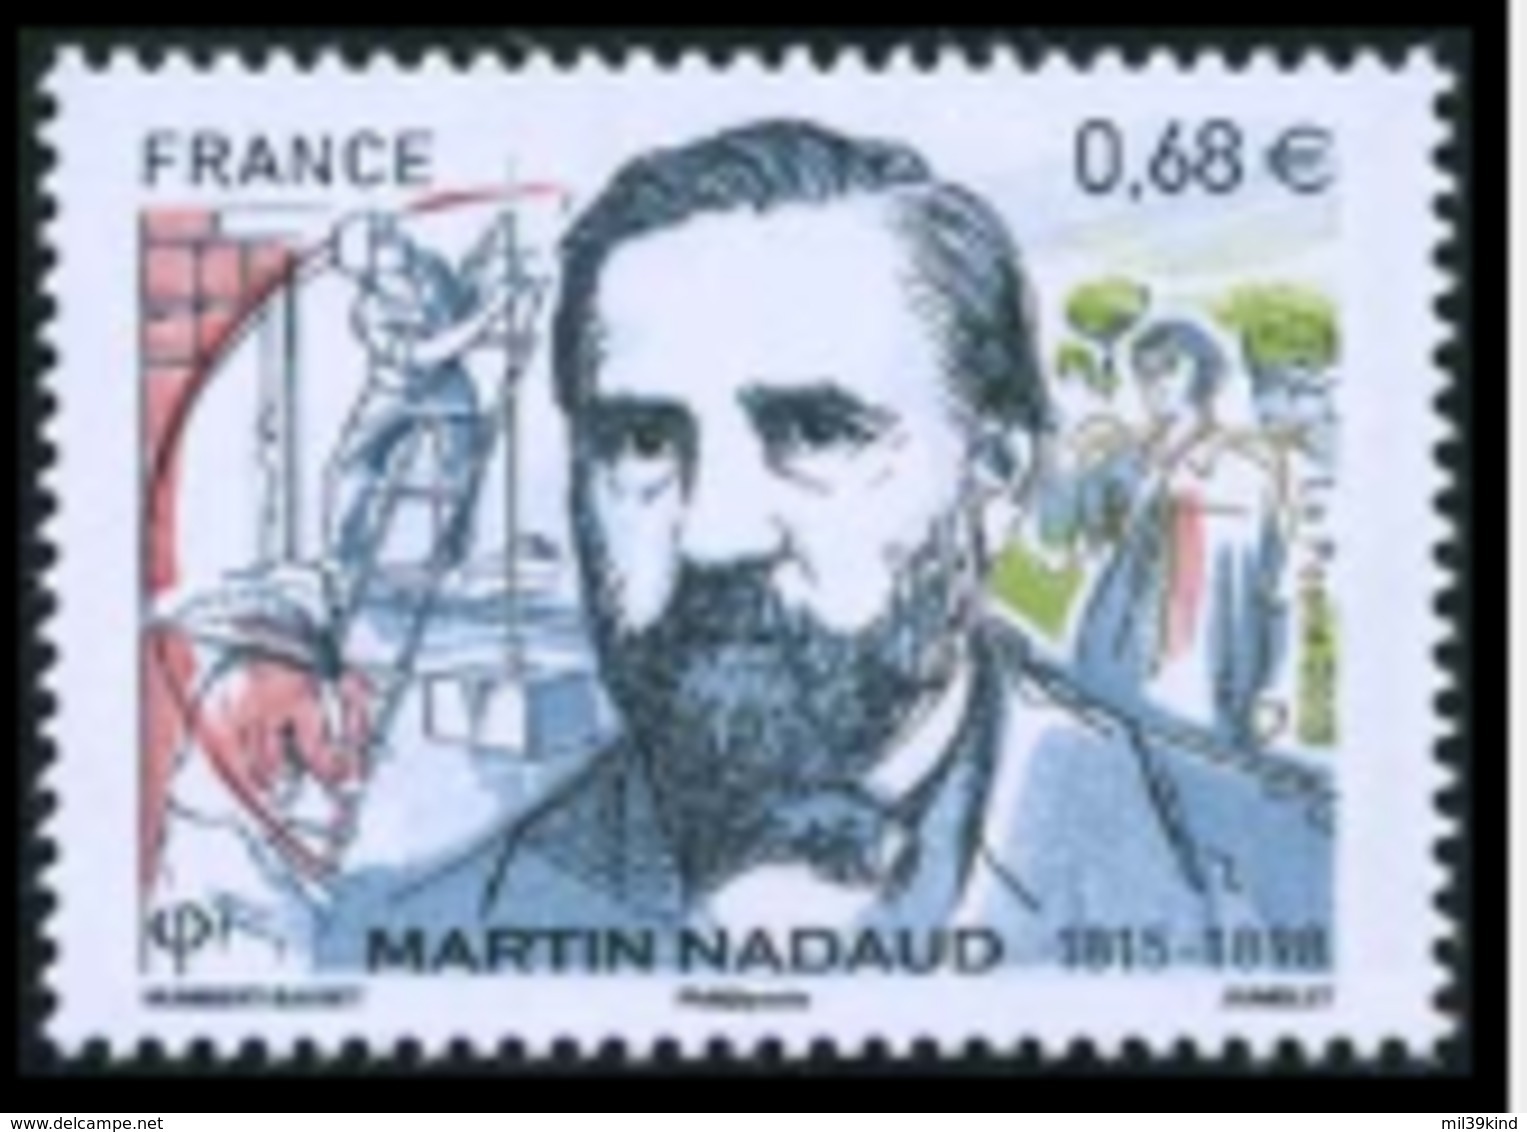 TIMBRE - FRANCE - 2015 - Martin Nadaud - Neufs